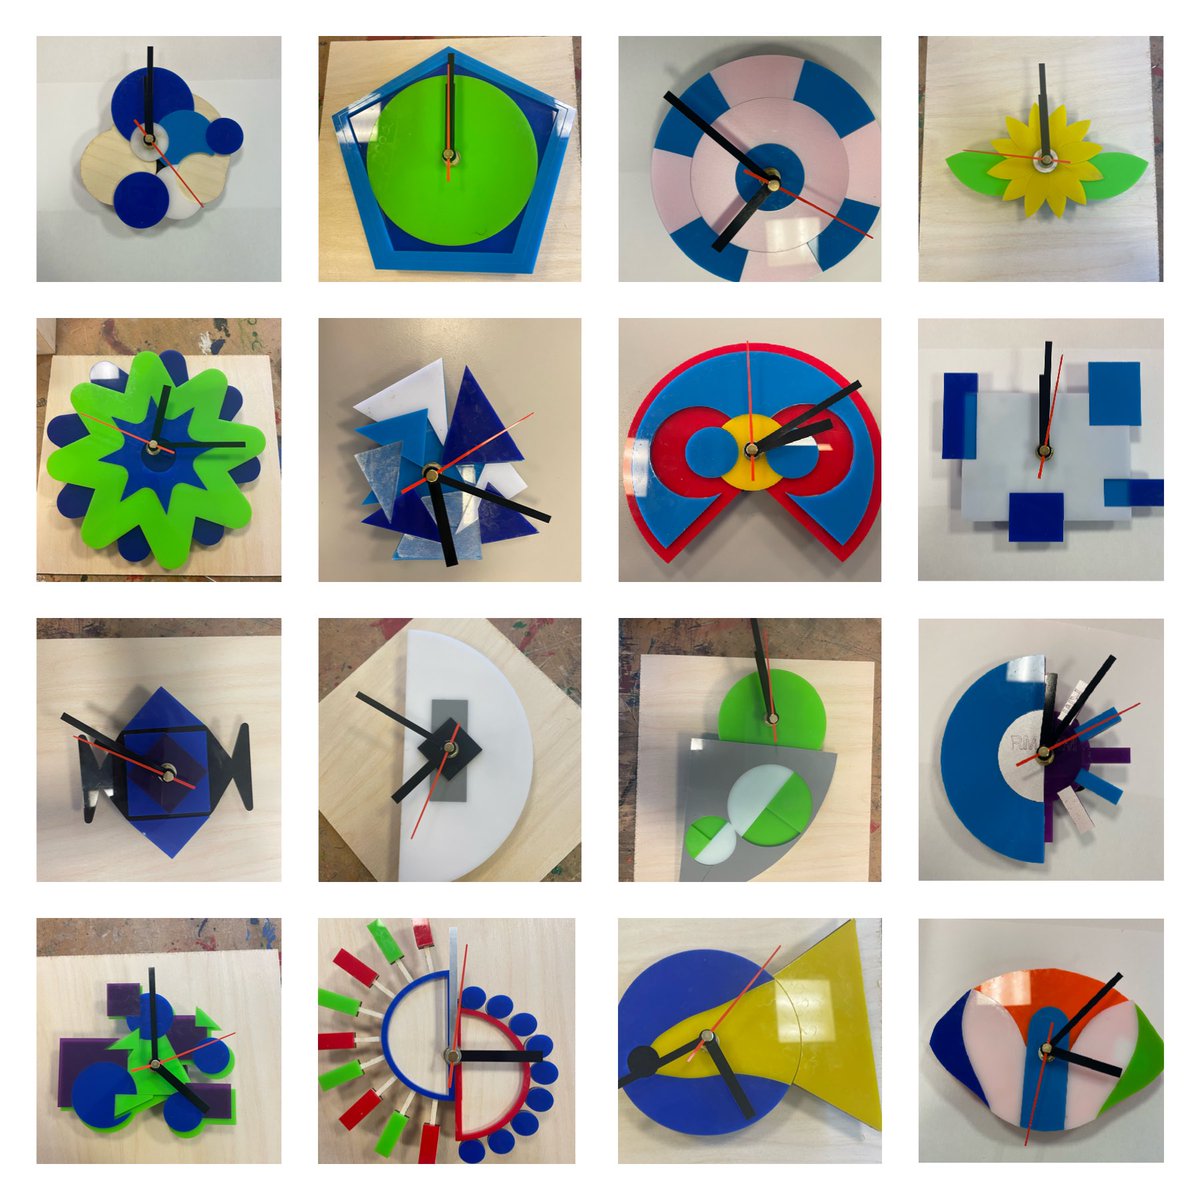 Miss Briggs’ Year 9 Designers have been using their @TechSoft_UK CAD skills to design clocks, taking inspiration from 21st Century design movements #bauhaus #destijl #memphis #creativity